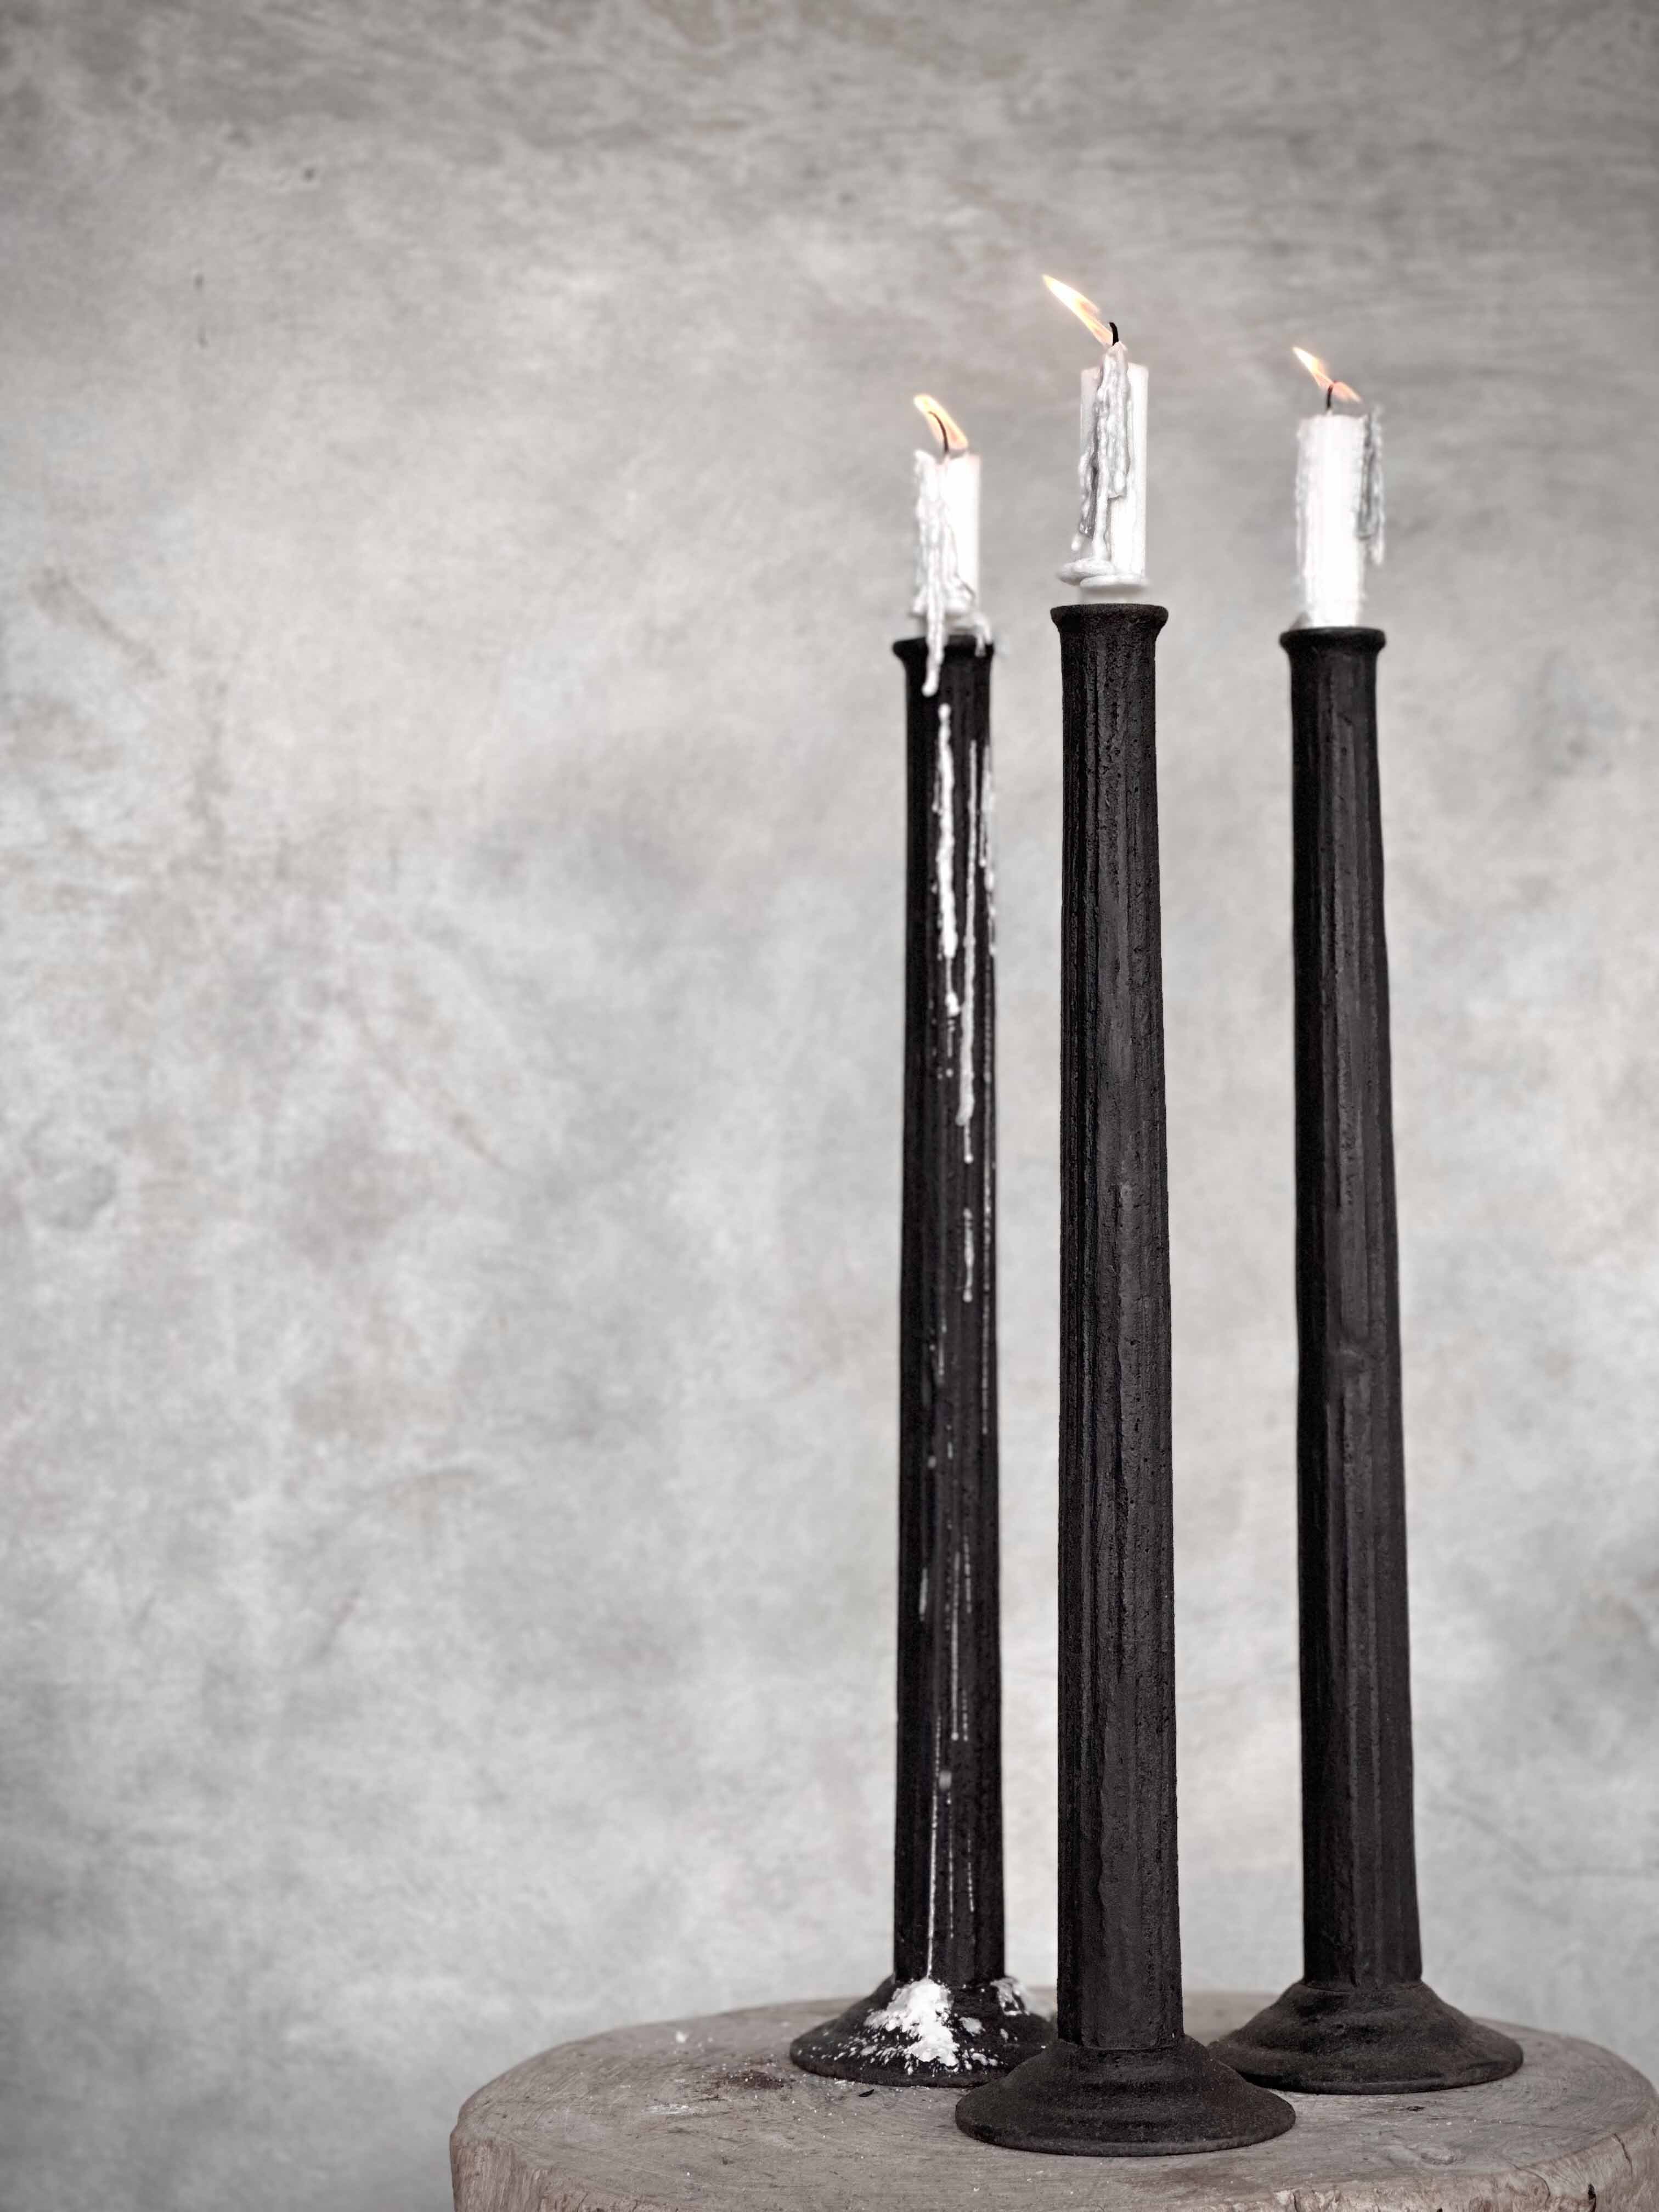 7 Black Cast Iron Metal Taper Candle Holder Set, Large